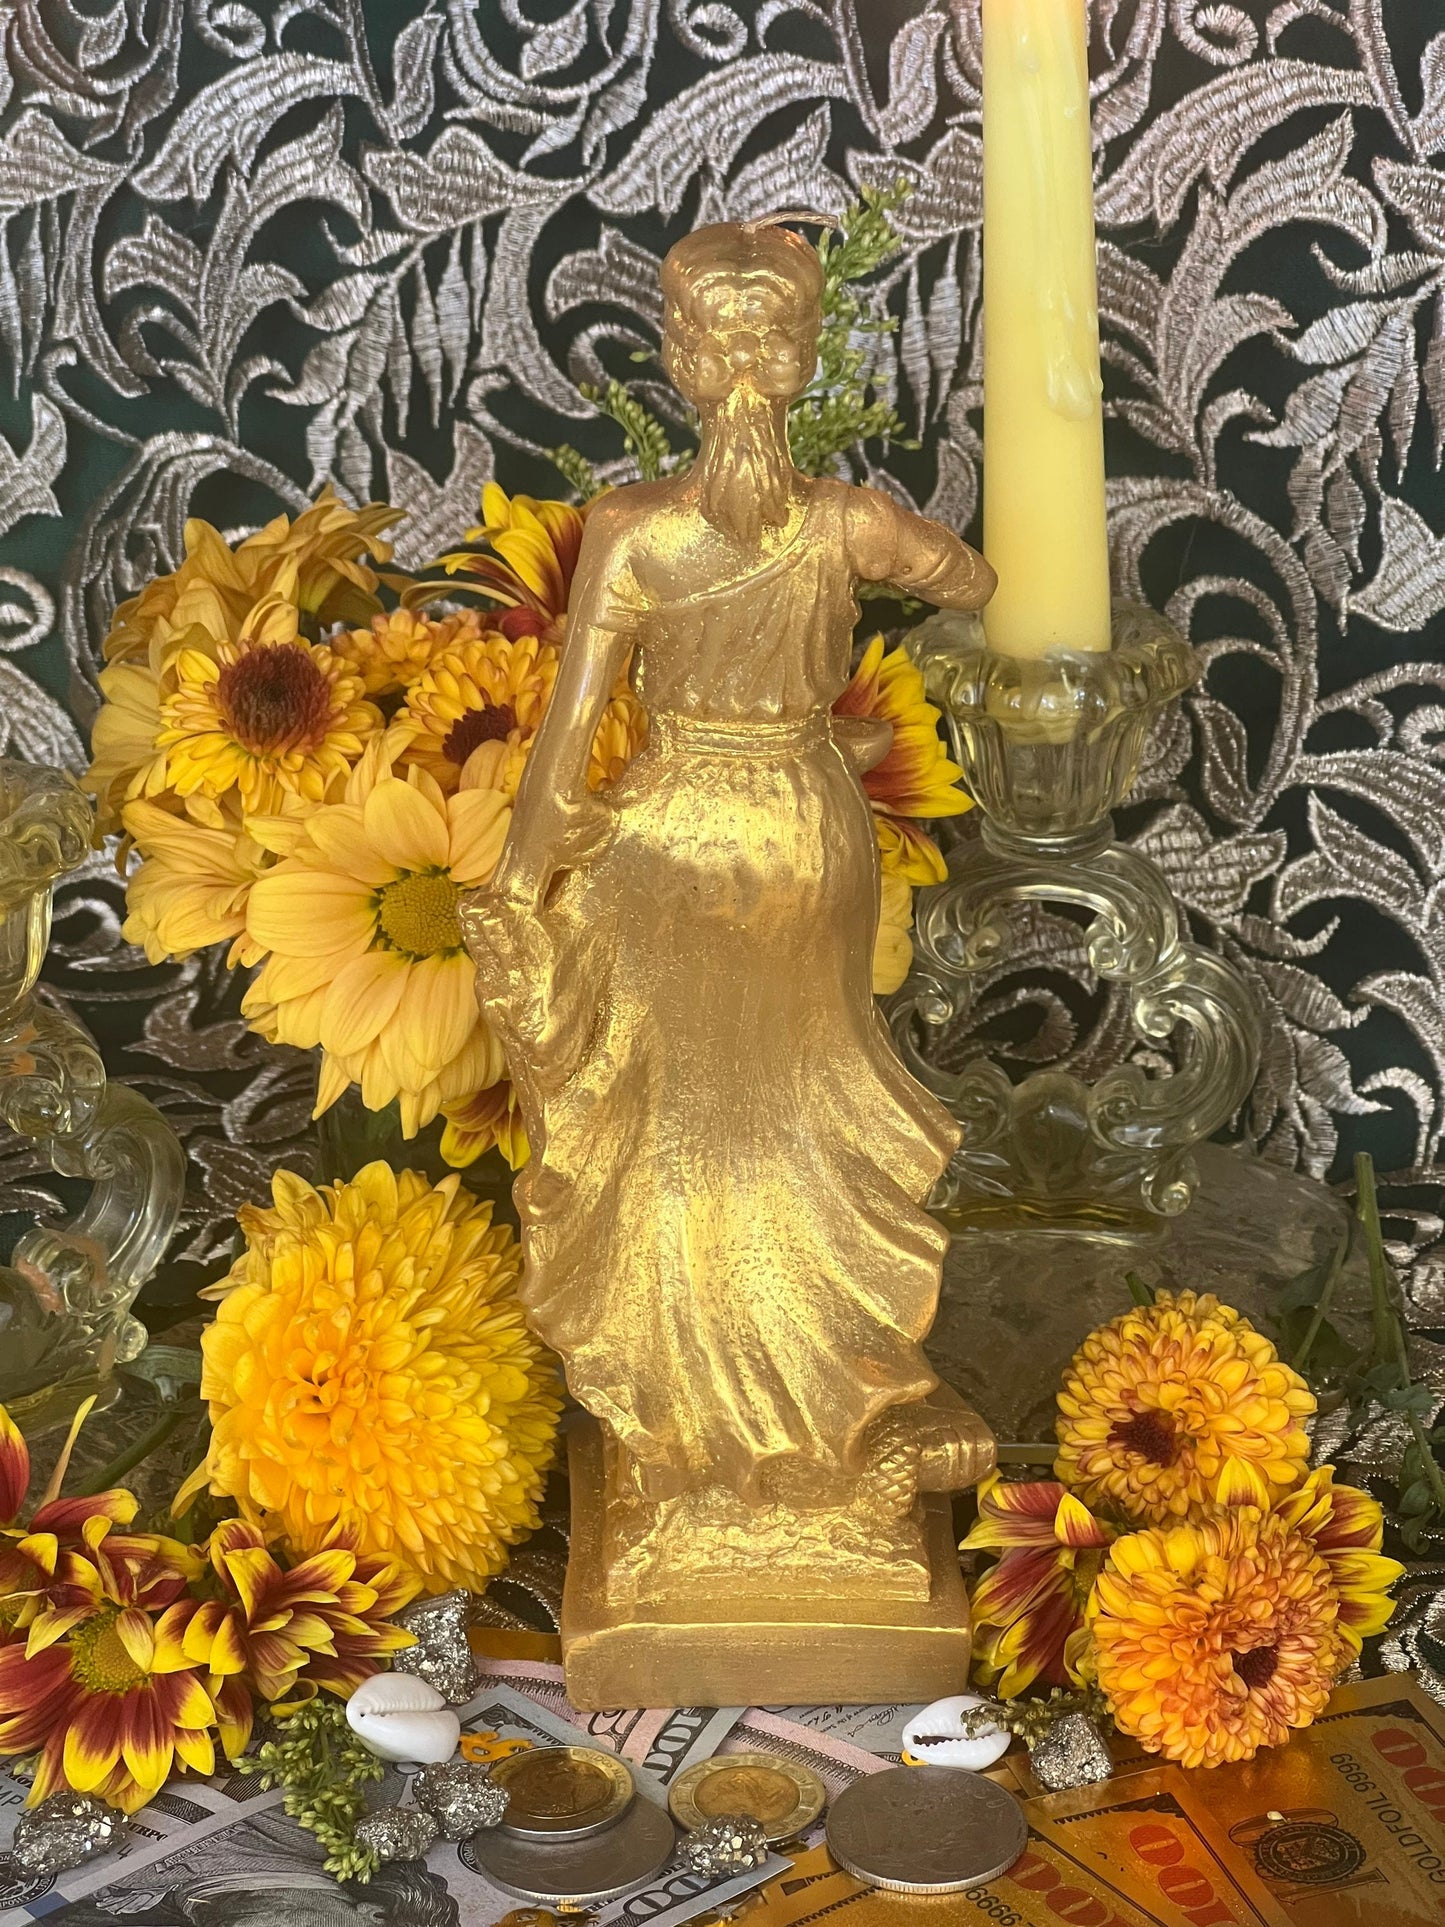 Lady Justice Candle + 24K Gold Leaf